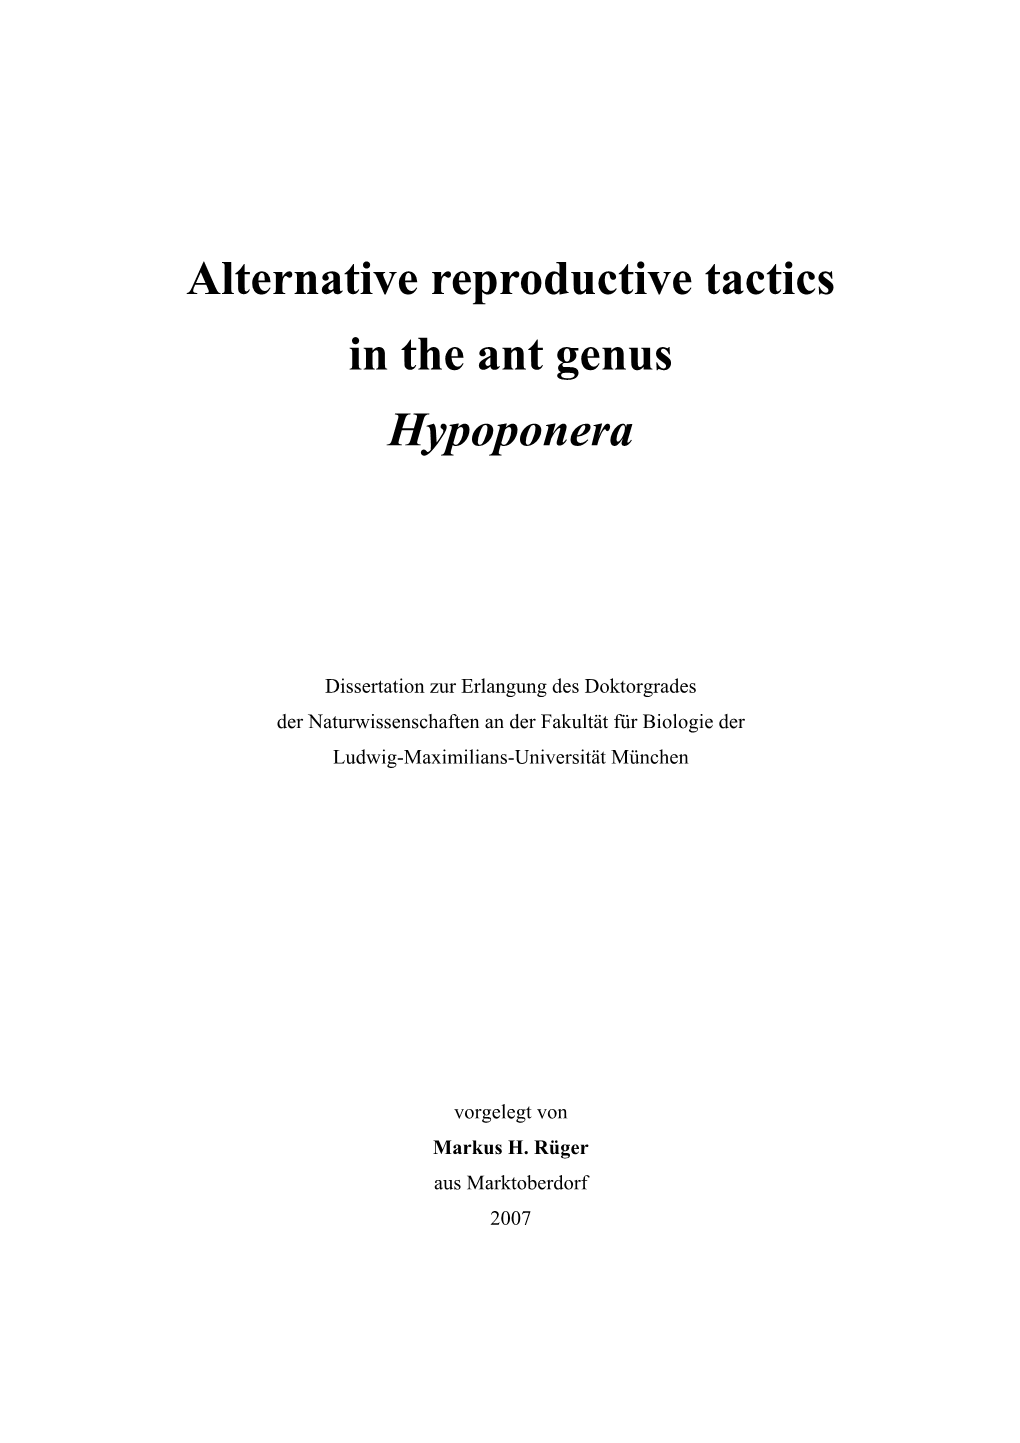 Alternative Reproductive Tactics in the Ant Genus Hypoponera